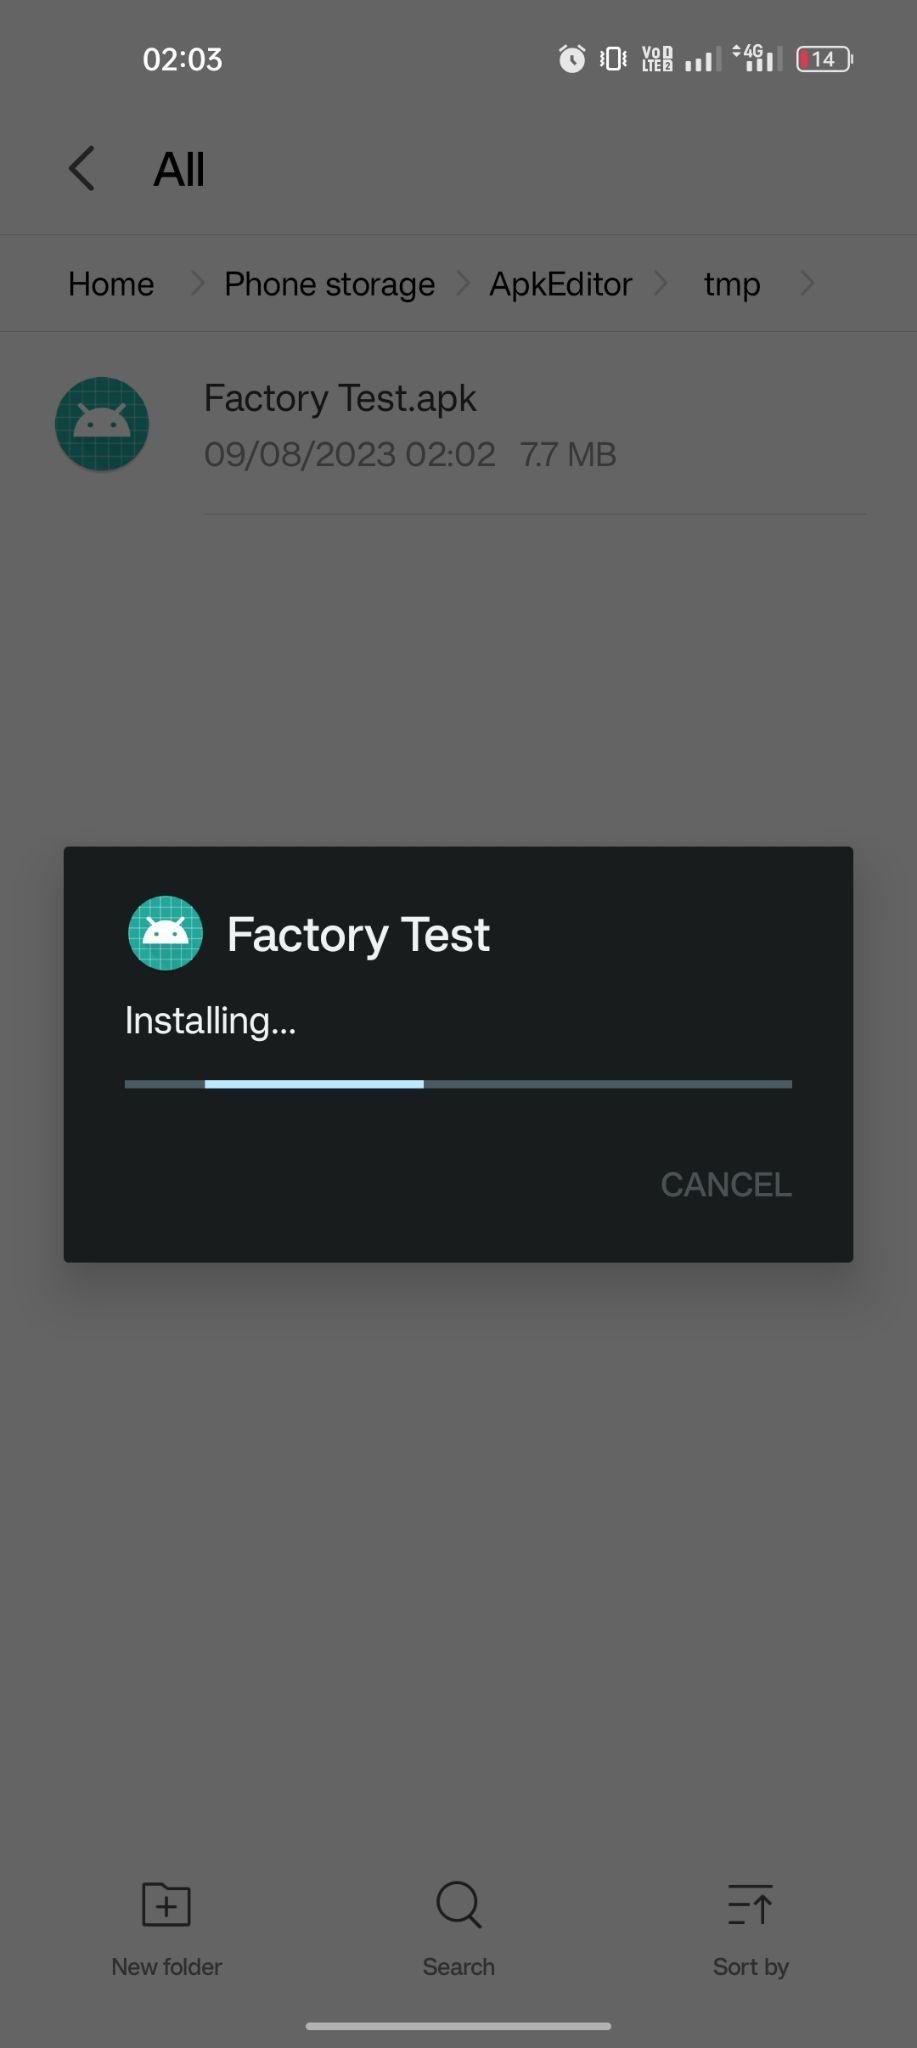 Factory Test apk installing